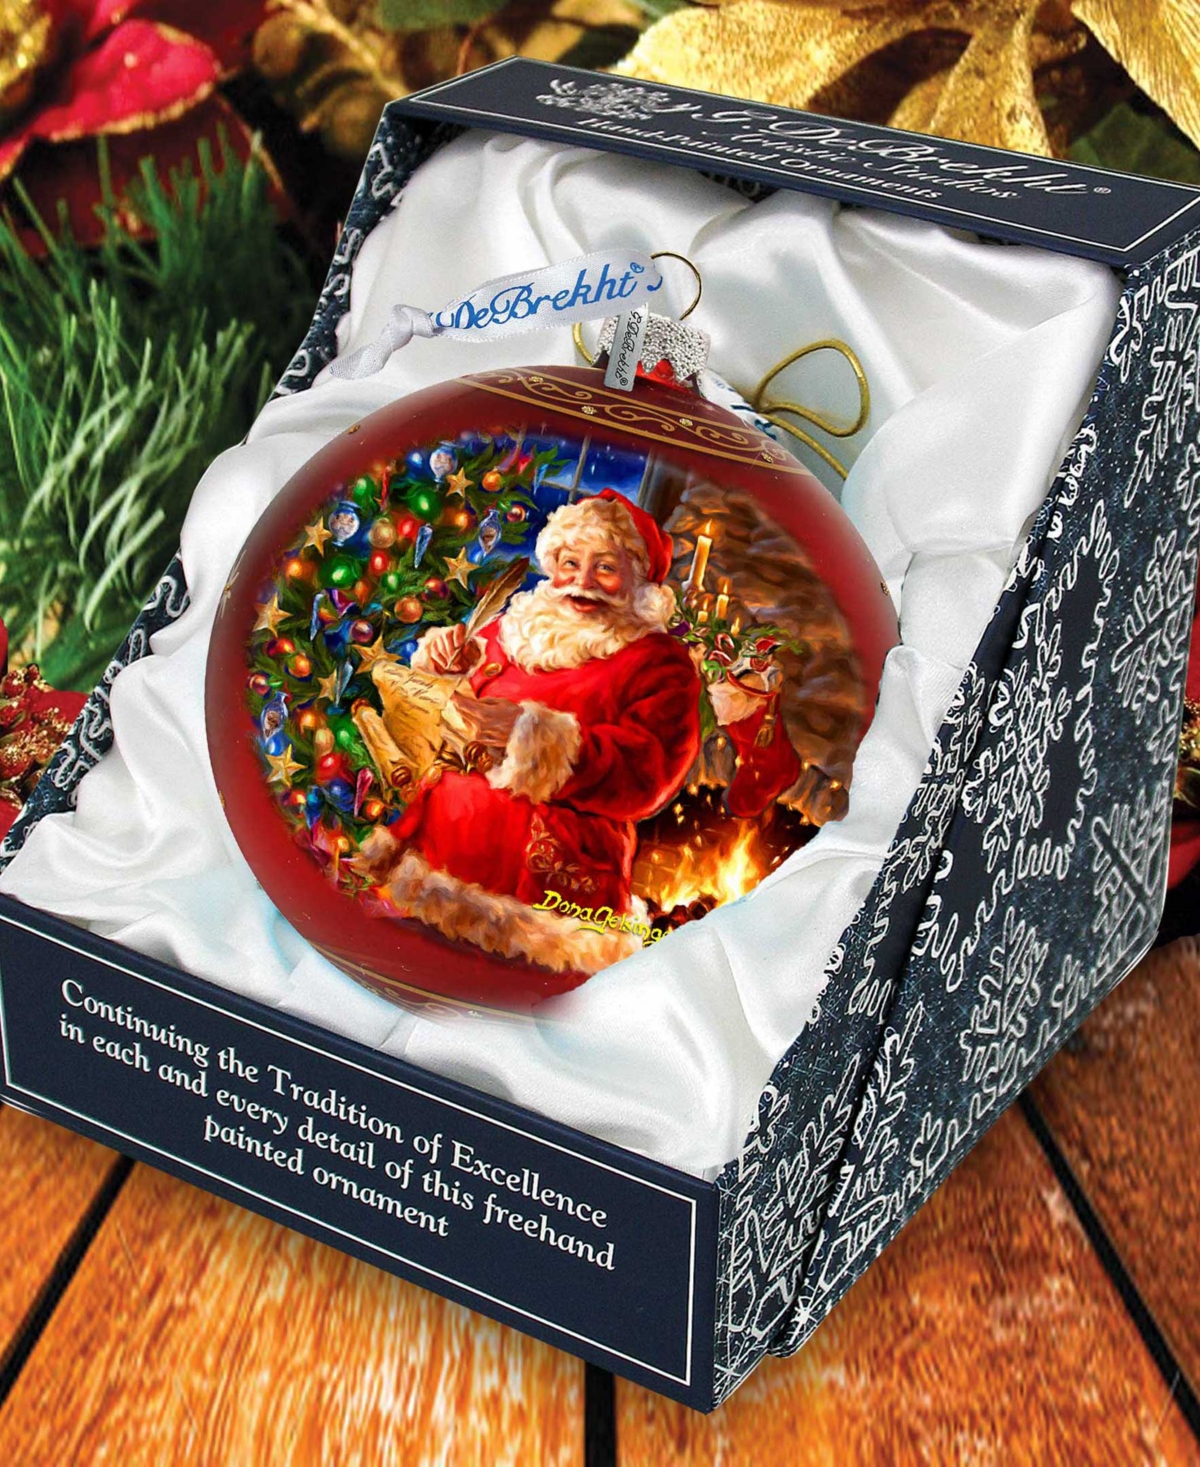 Shop Designocracy Wish List Santa Large Holiday Glass Collectible Ornaments D. Gelsinger In Multi Color